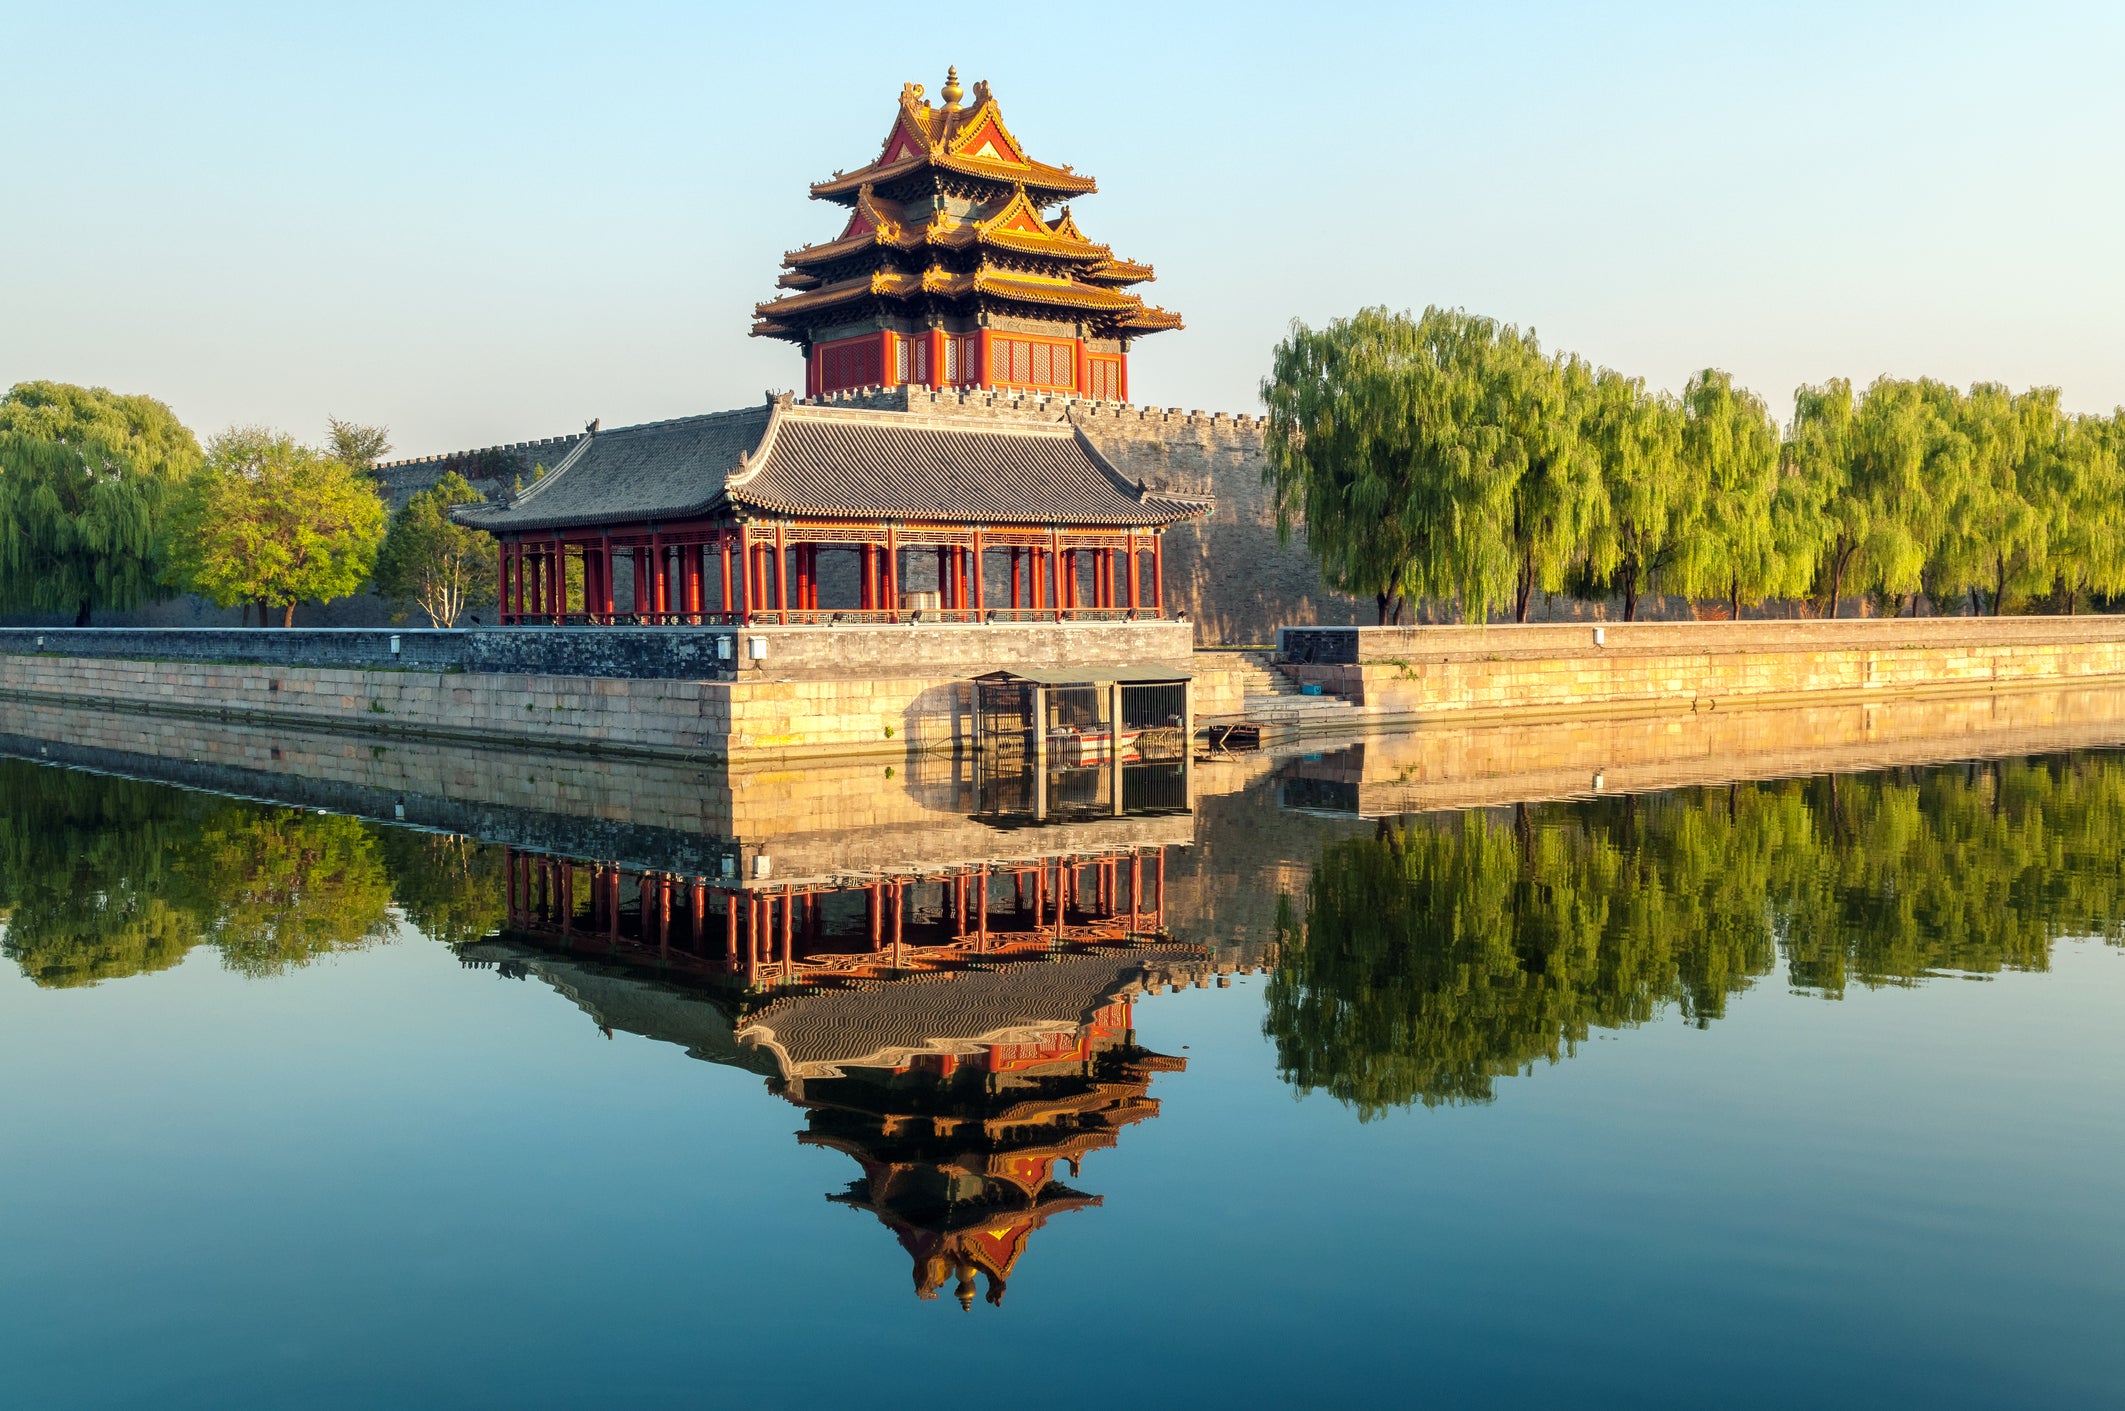 Northwest Wall of Forbidden City, Beijing China